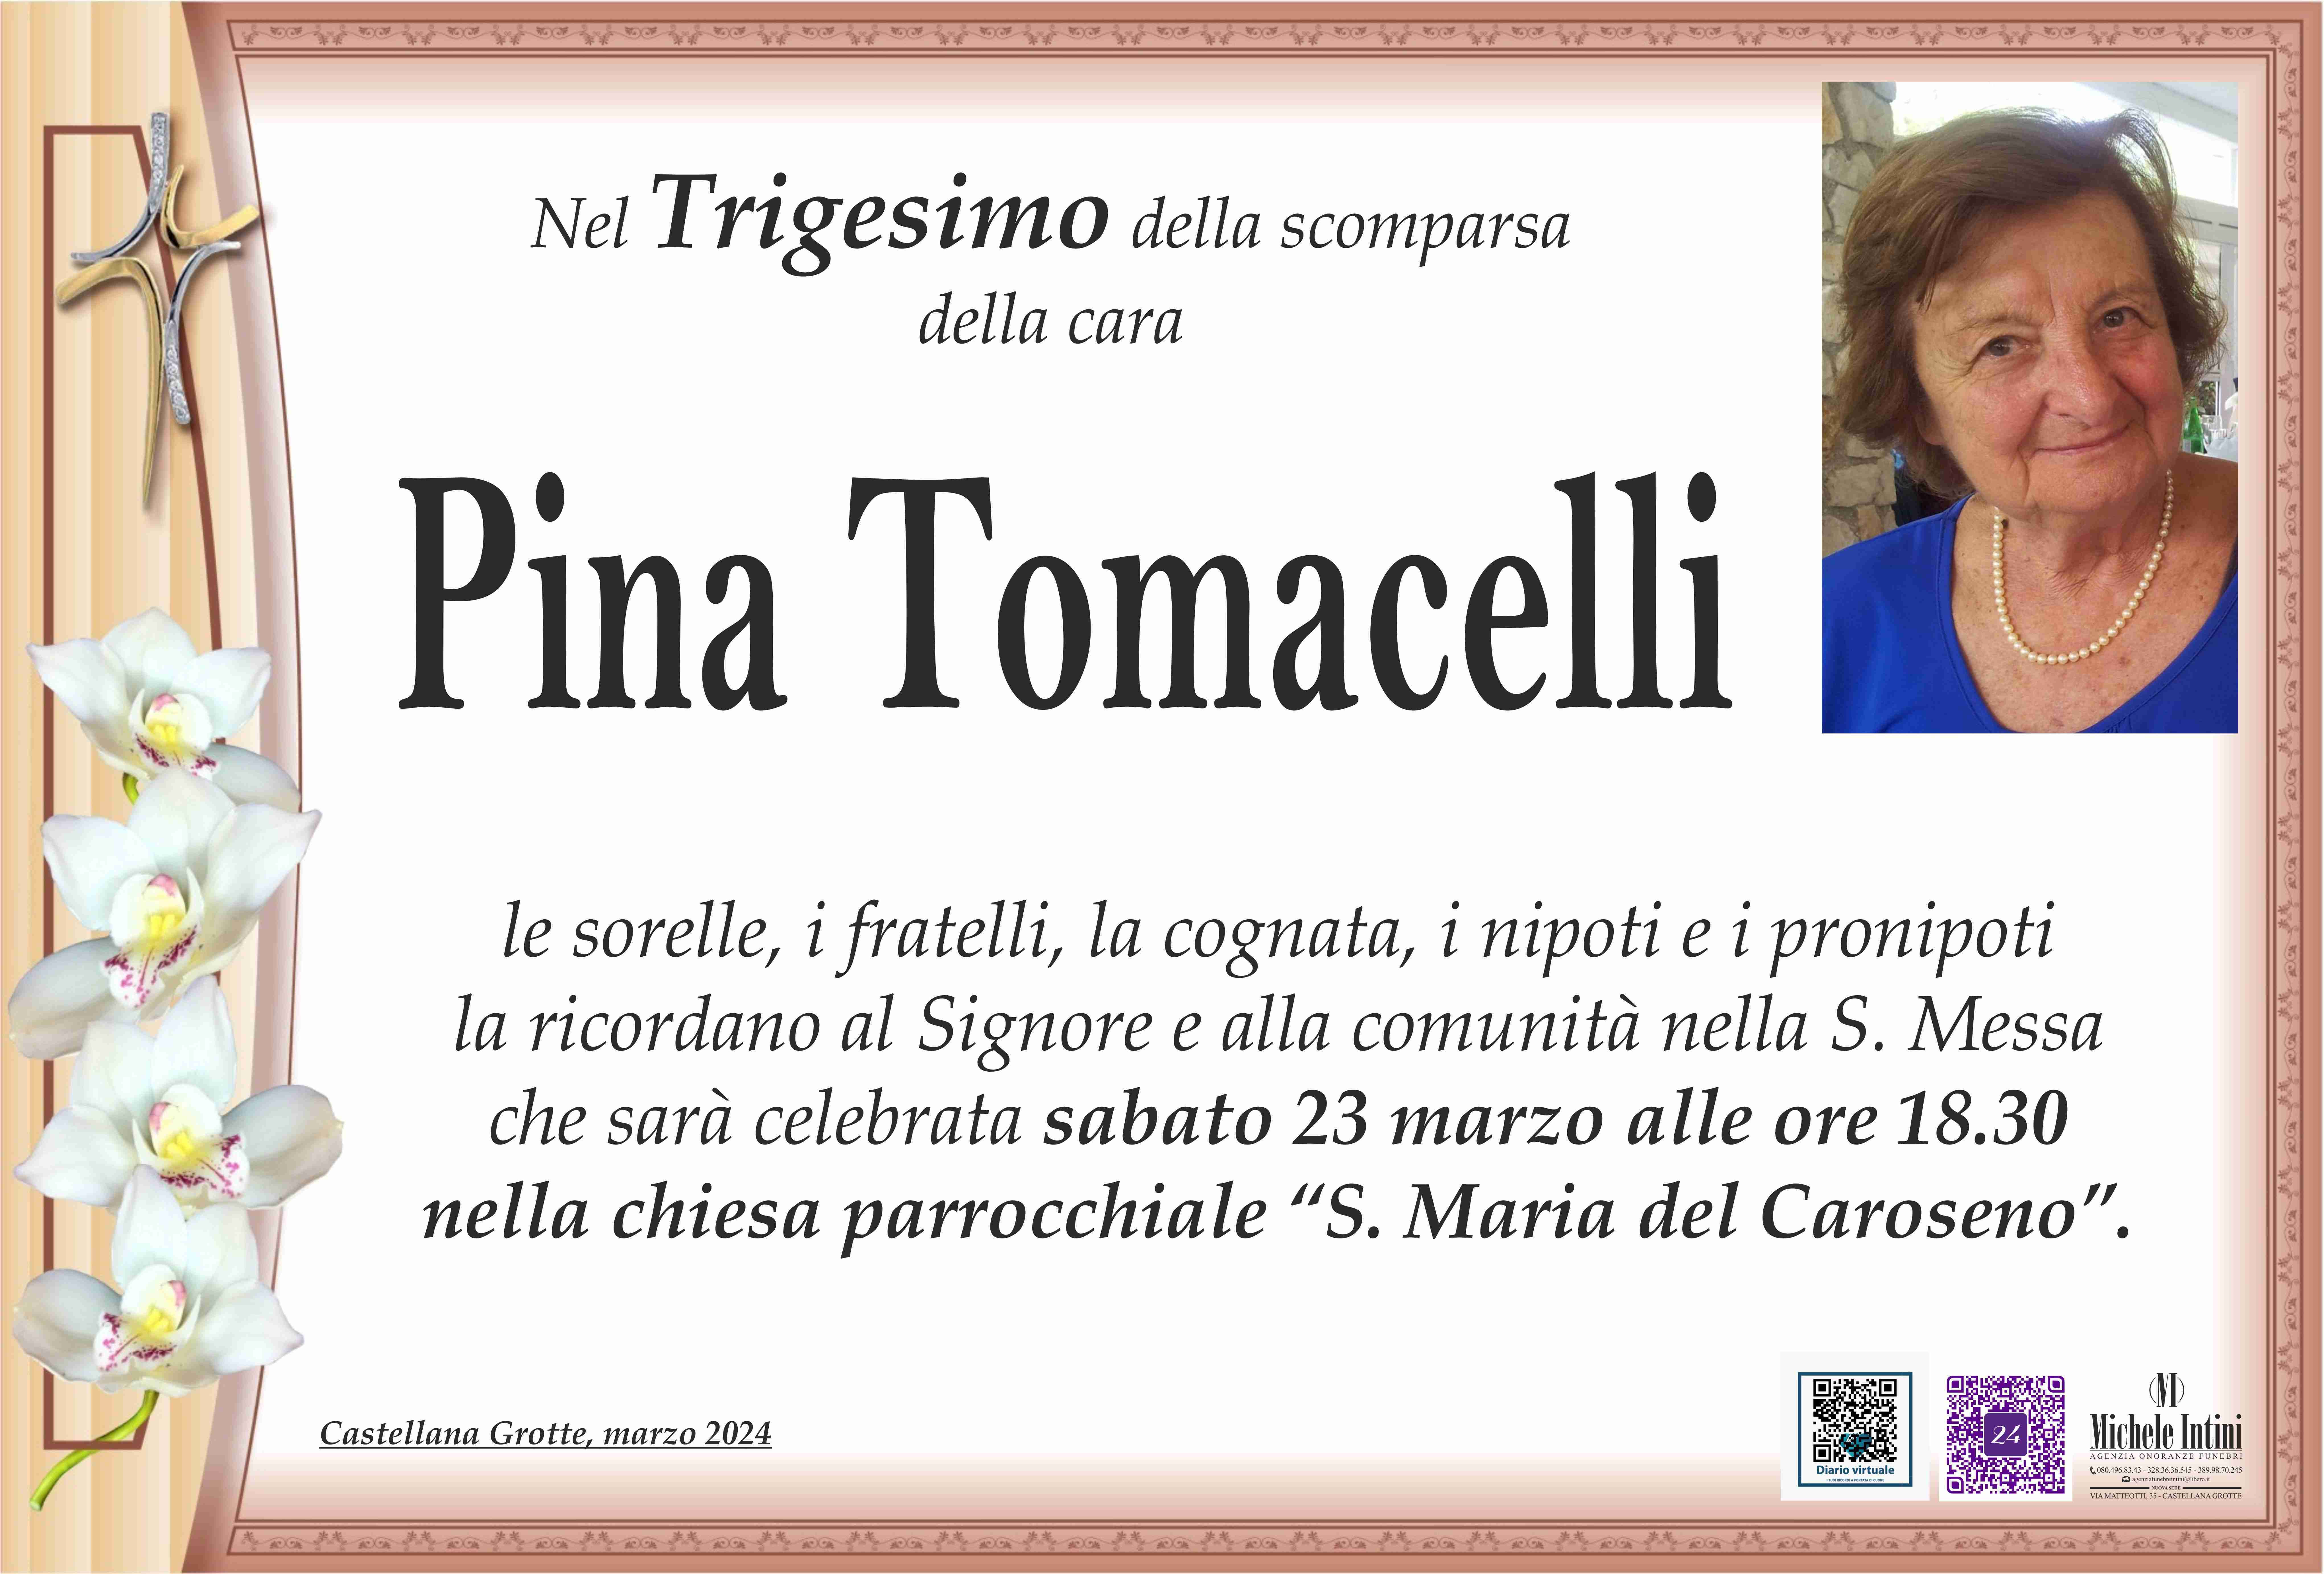 Pina Tomacelli